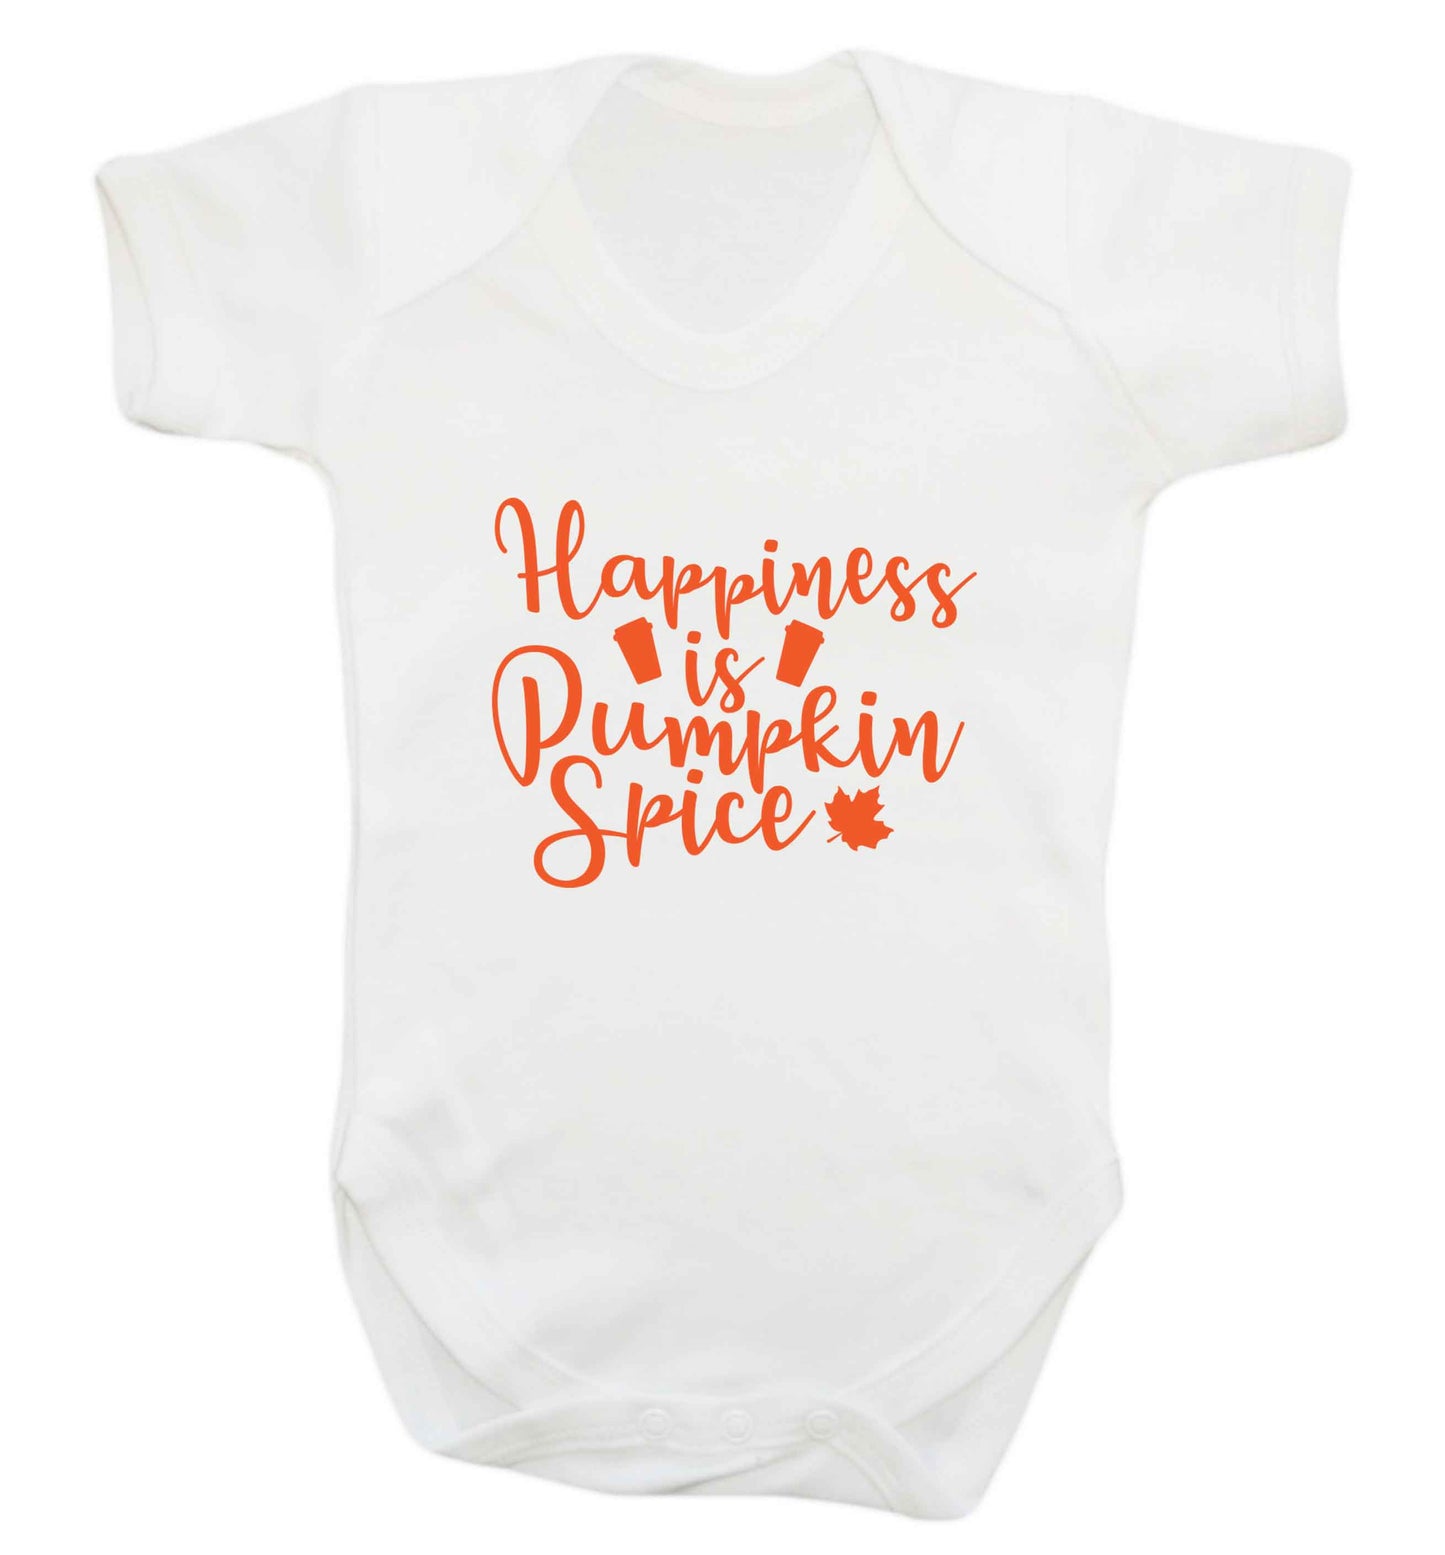 Happiness Pumpkin Spice baby vest white 18-24 months